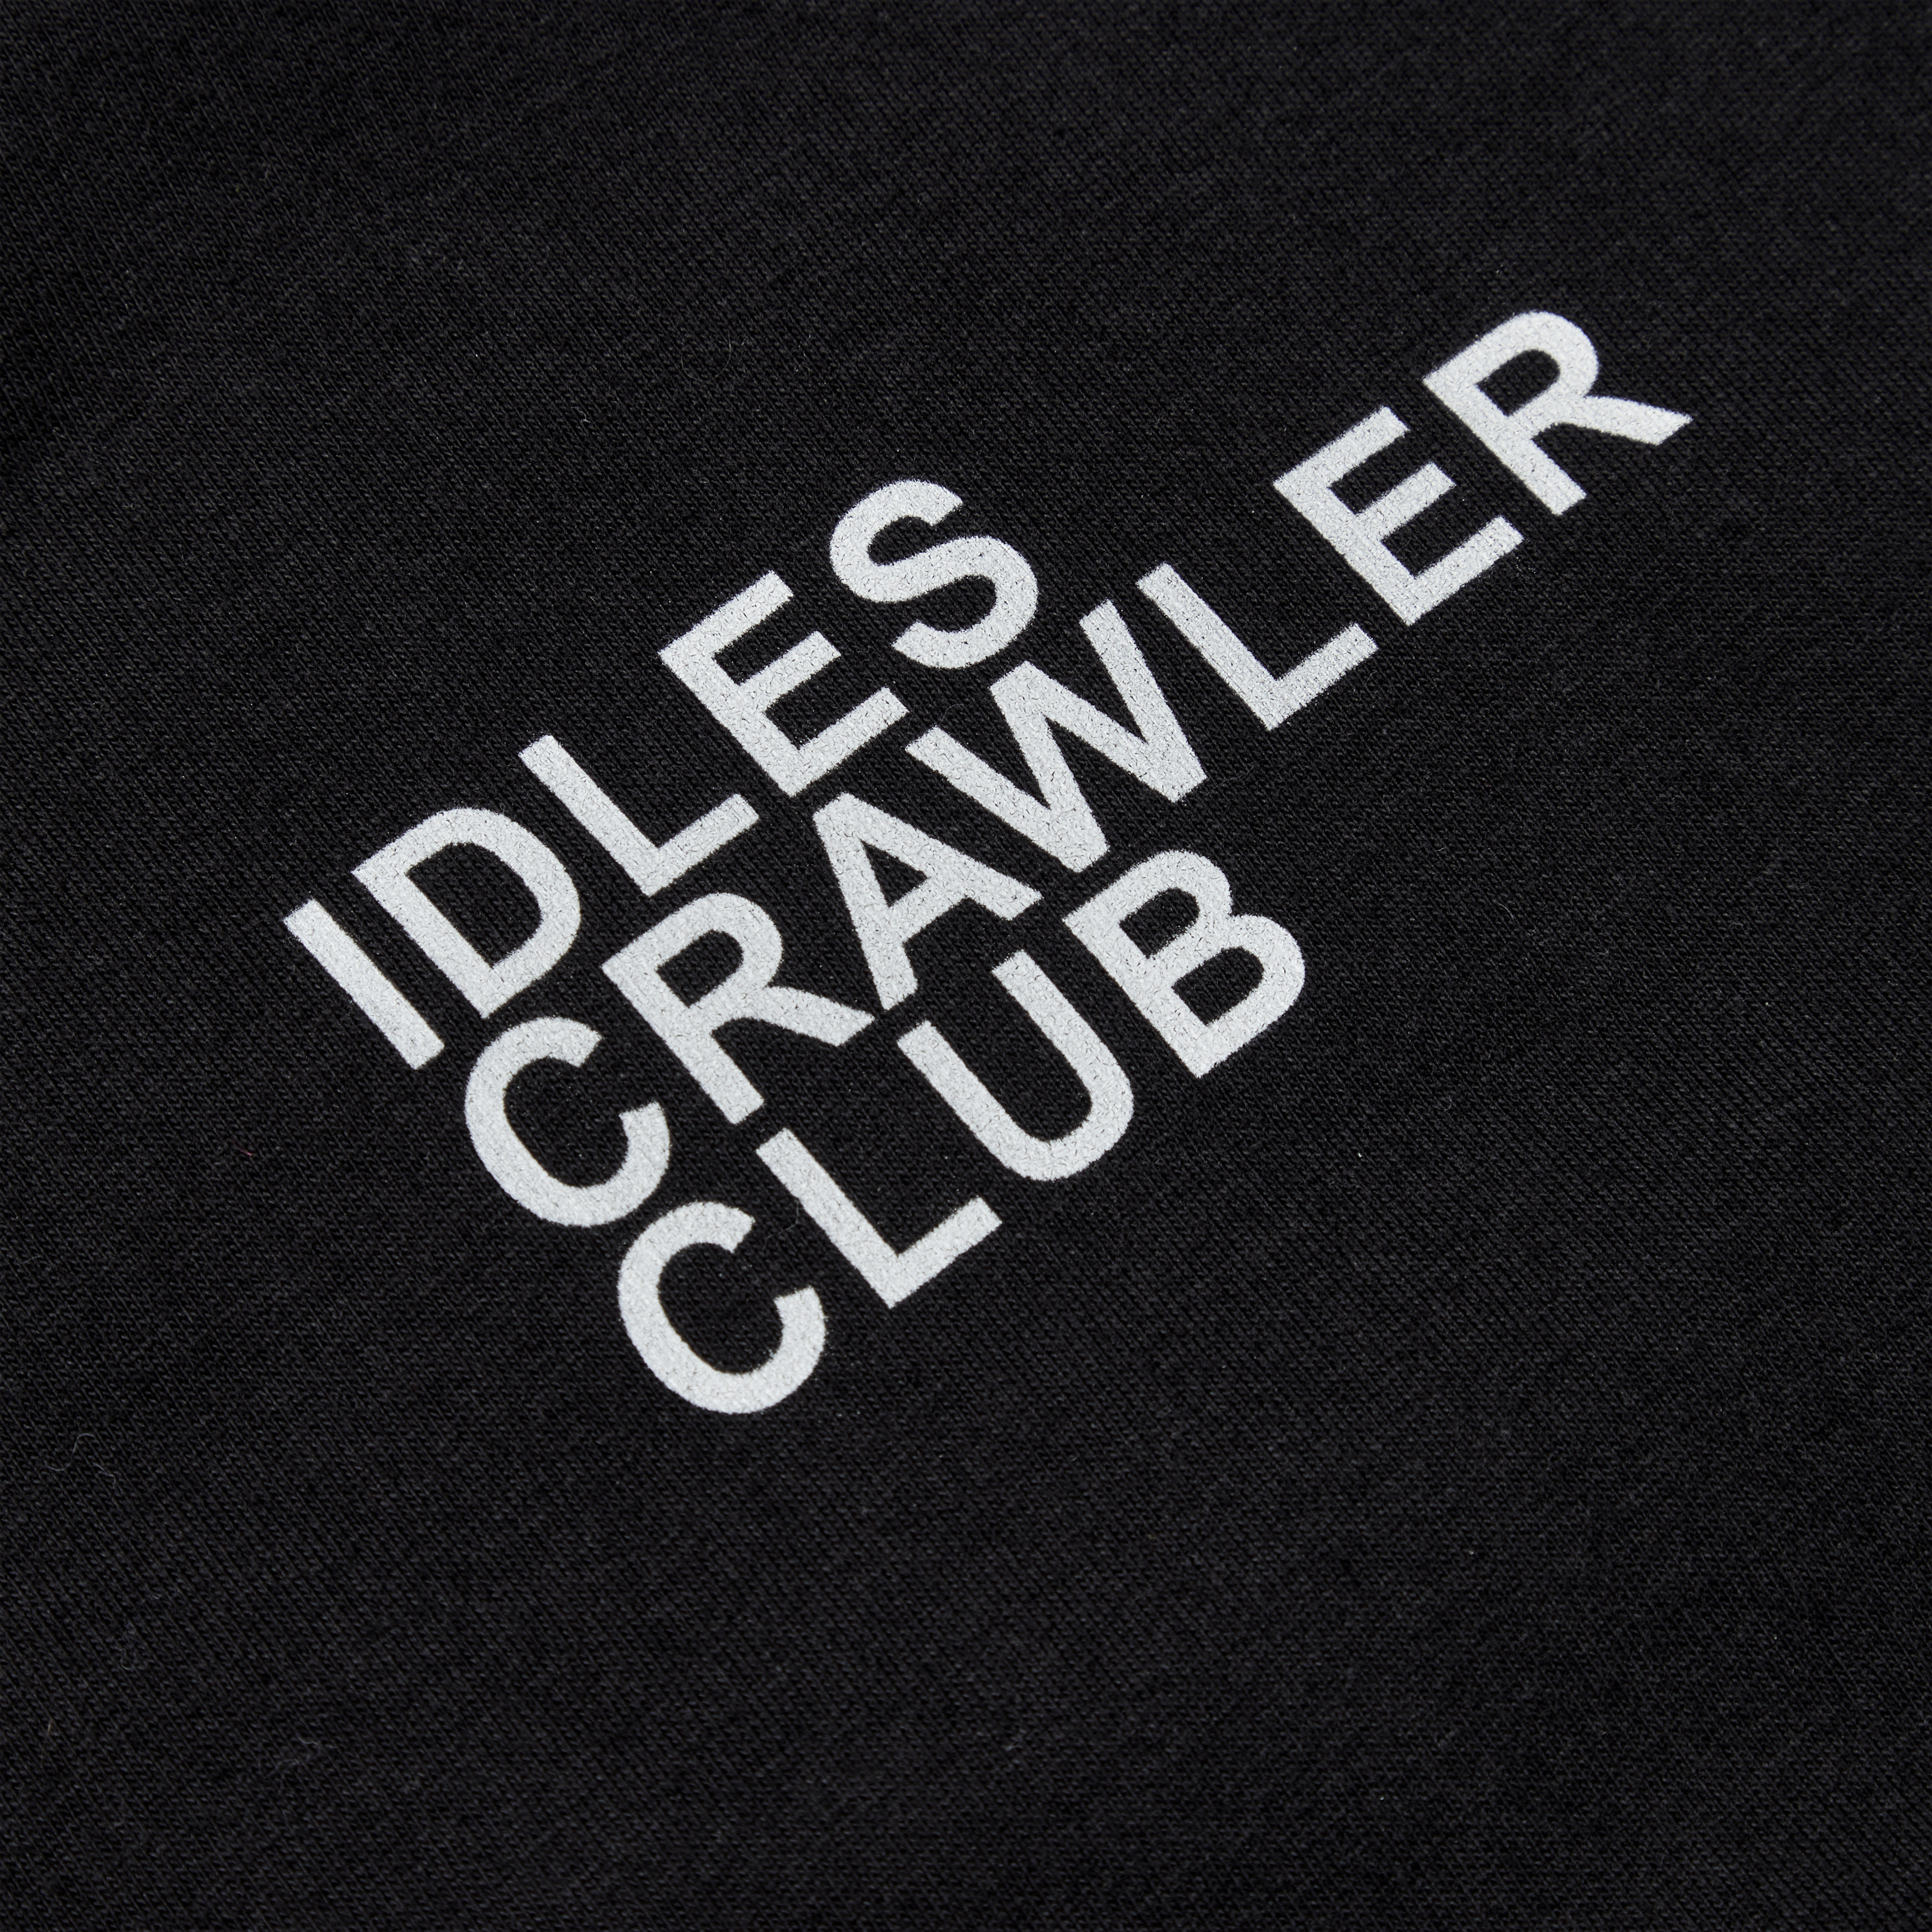 IDLES - Crawler Club T-Shirt.